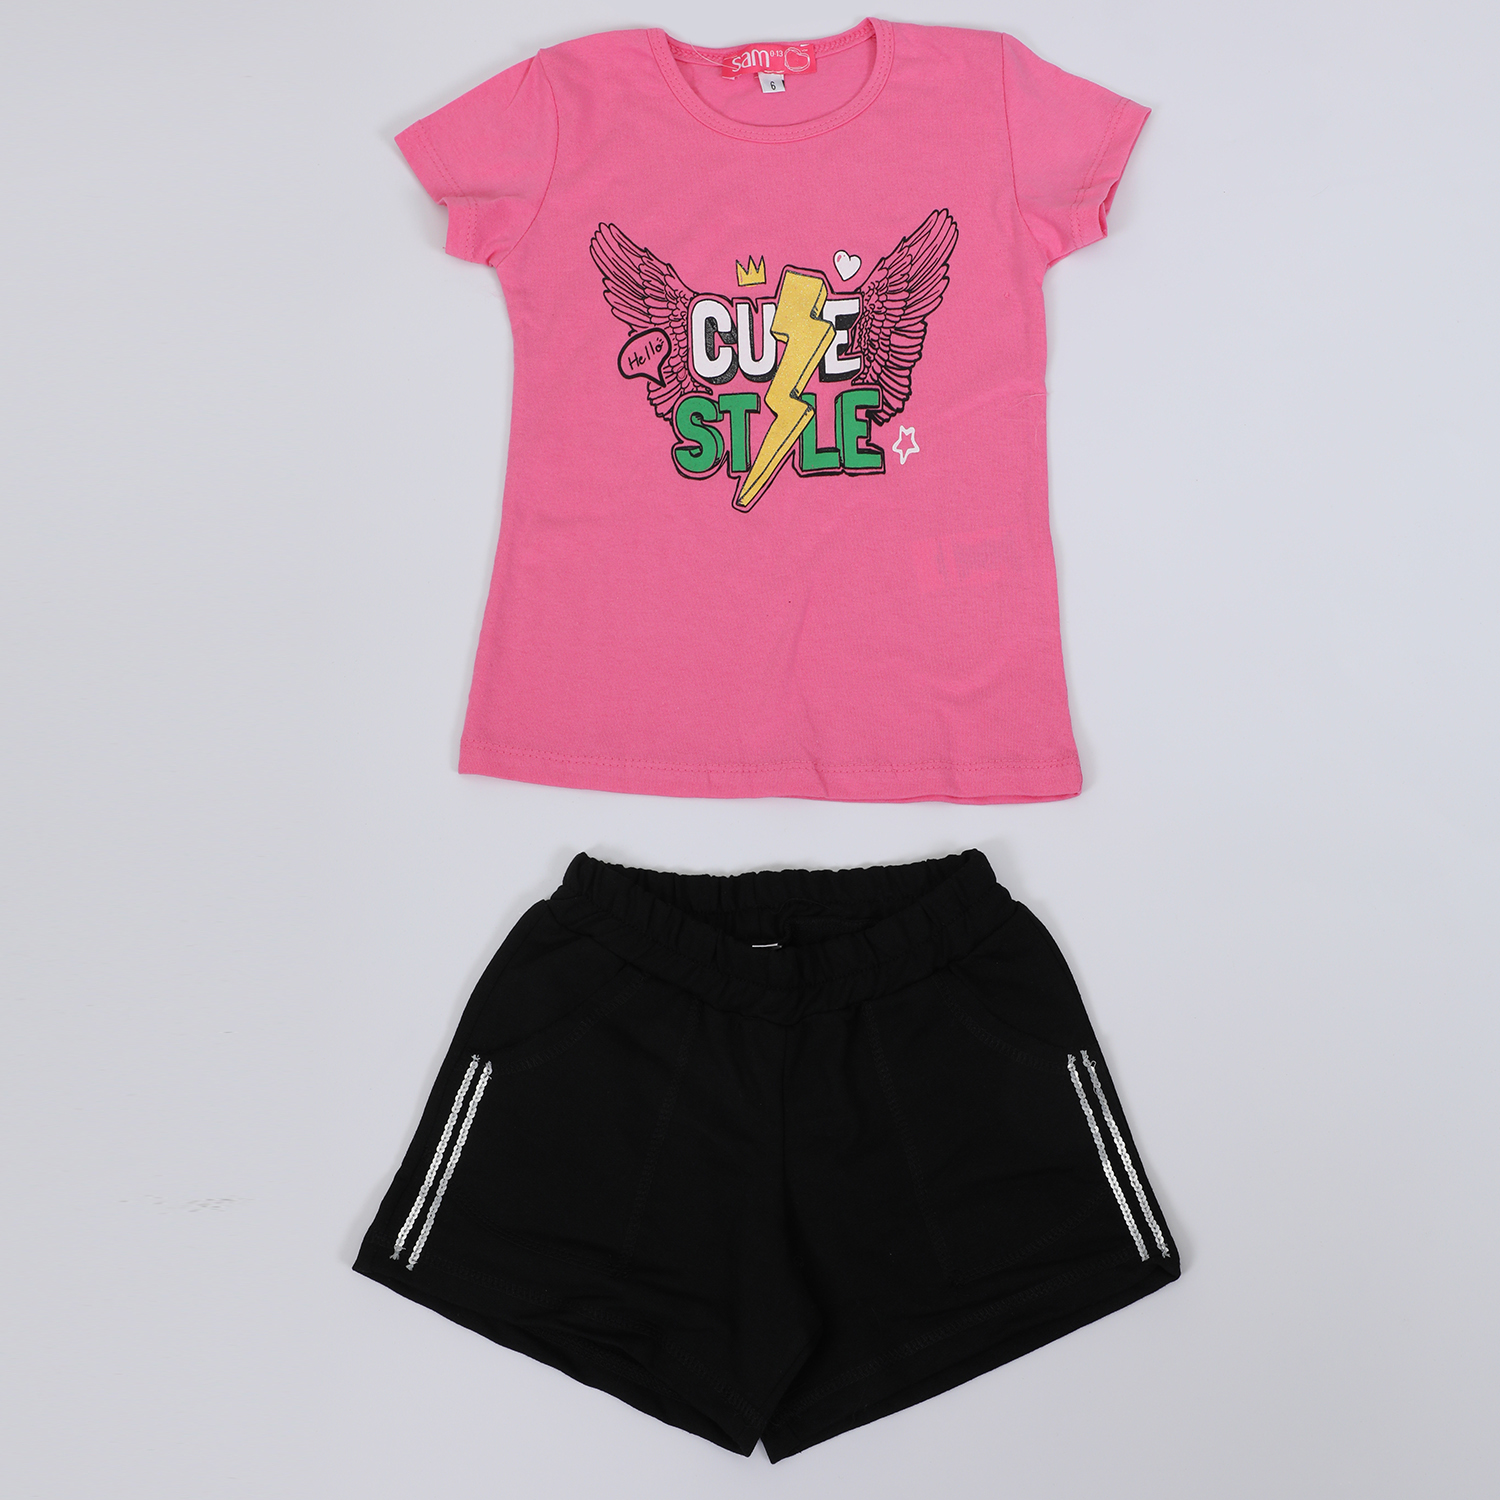 SAM 0-13 Παιδικό σετ από μπλούζα και σορτσάκι SAM 0-13 CUTE STYLE ροζ μαύρη